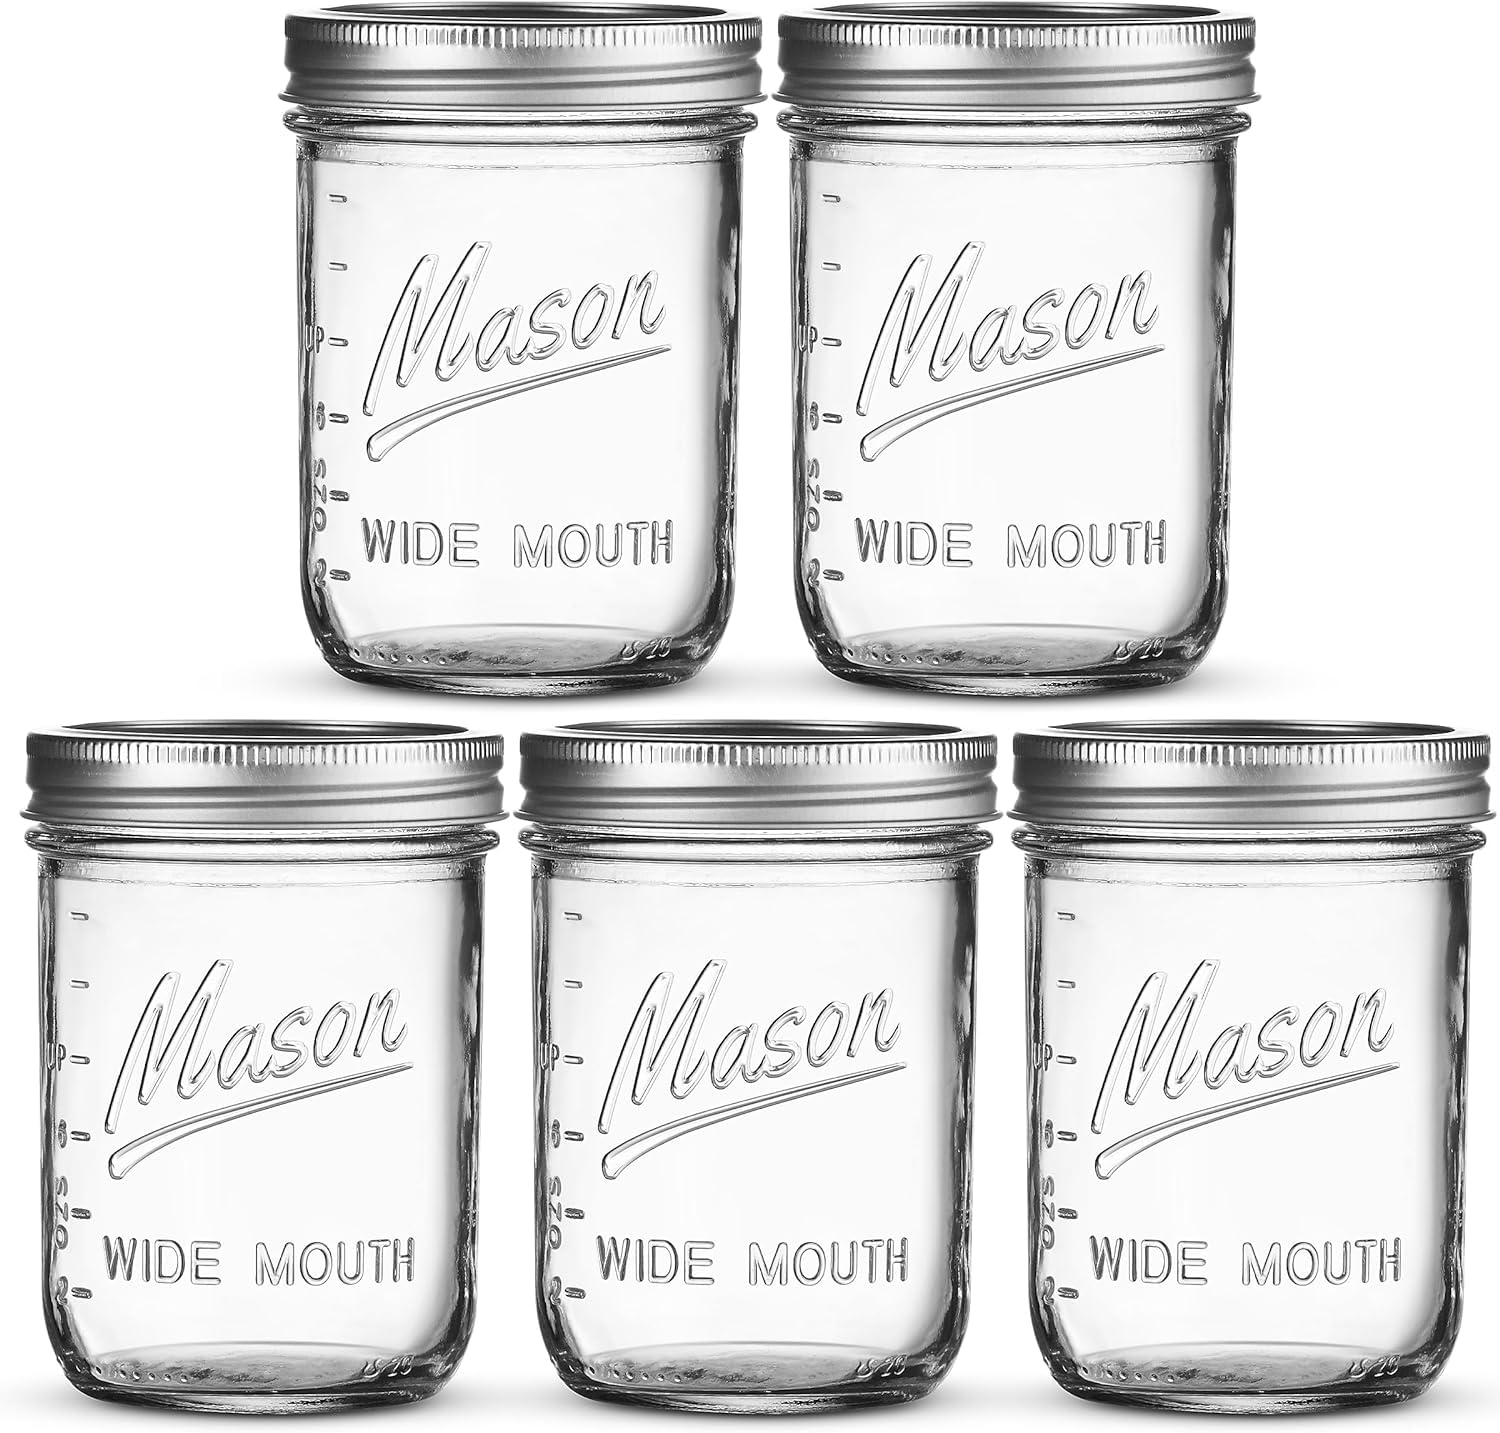 SEWANTA Wide Mouth Mason Jars 16 oz [5 Pack] With mason jar lids and Bands, mason jars 16 oz - For Canning, Fermenting, Pickling - Jar D�cor - Microwave/Freeze/Dishwasher Safe.  - Like New